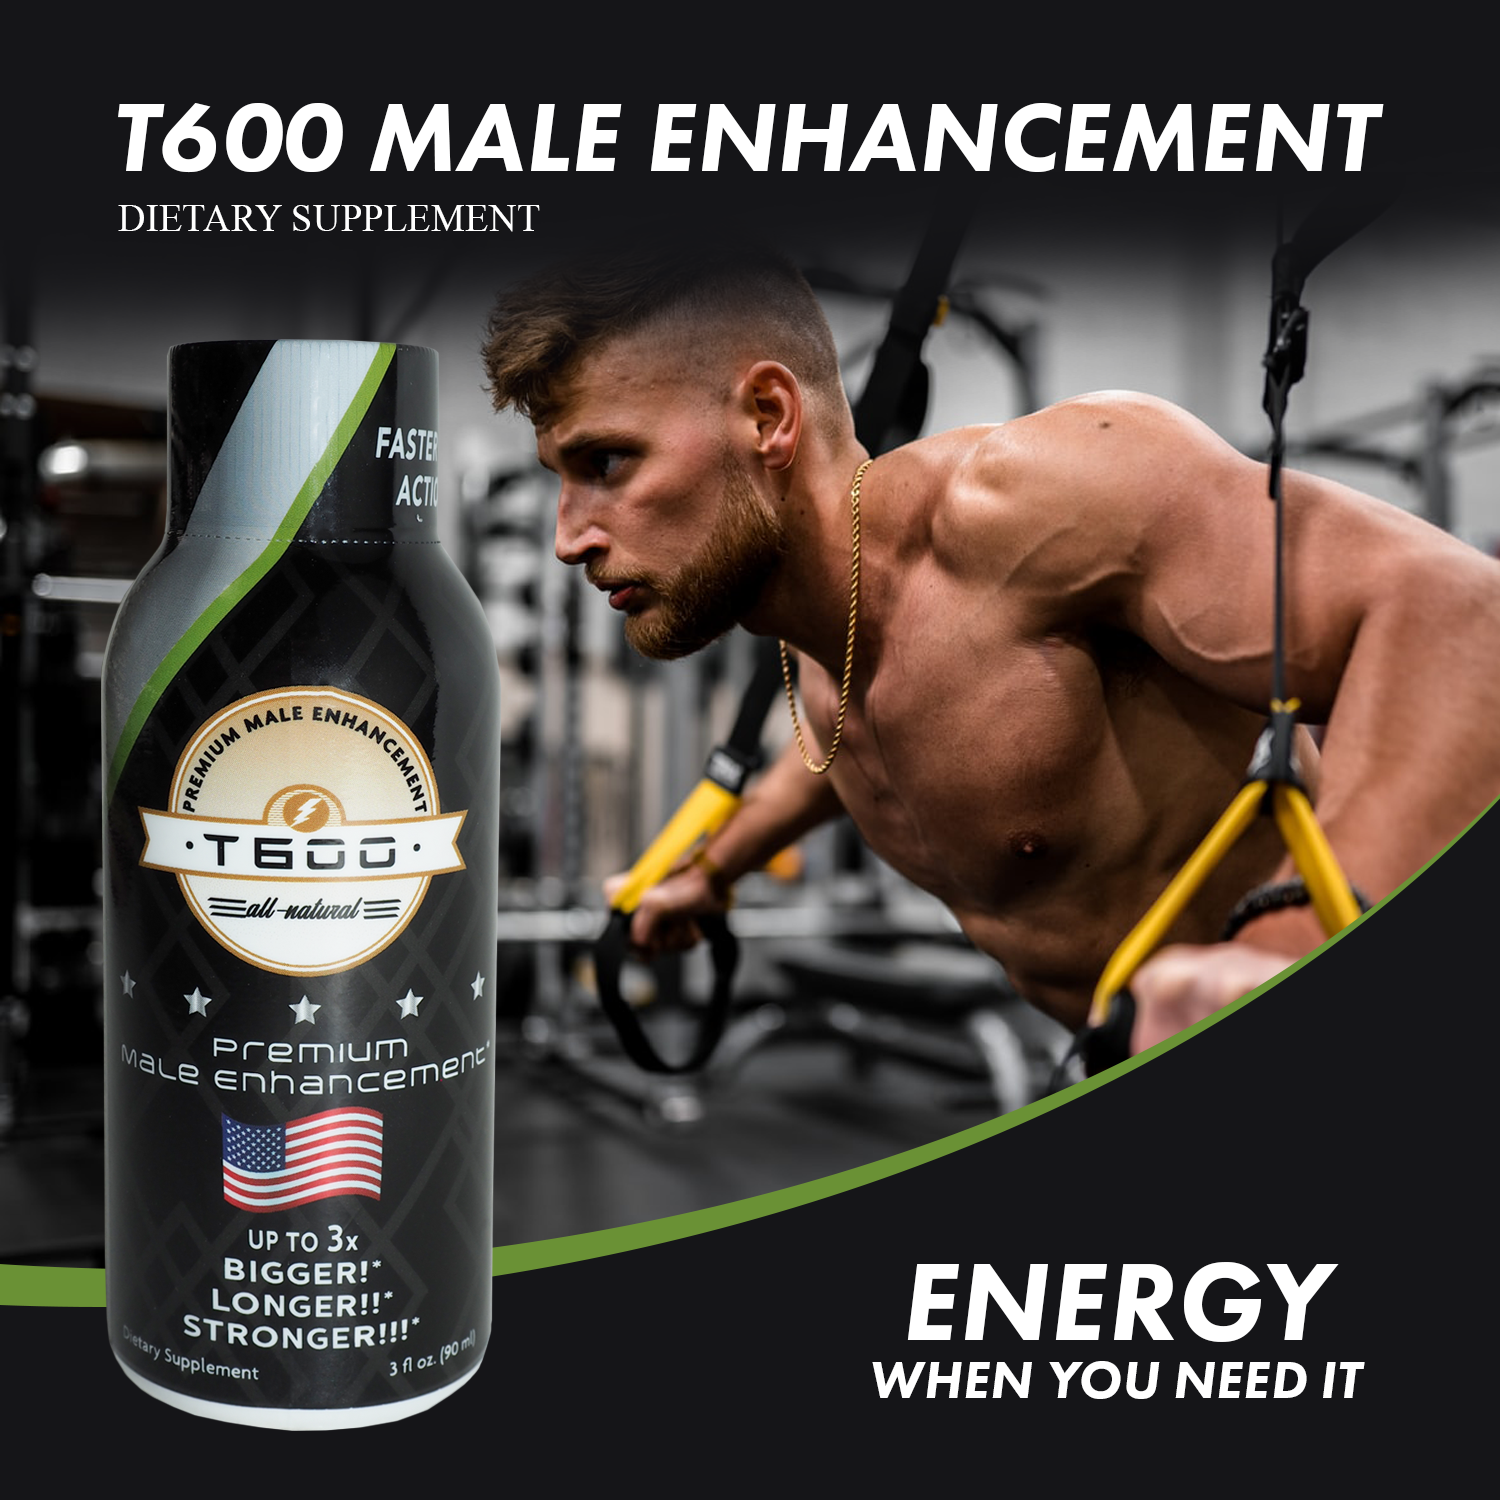 T600 Premium Male Enhancement, Natural Muscle and Energy Booster, 3 fl oz. Liquid Shot - Coffee Flavor